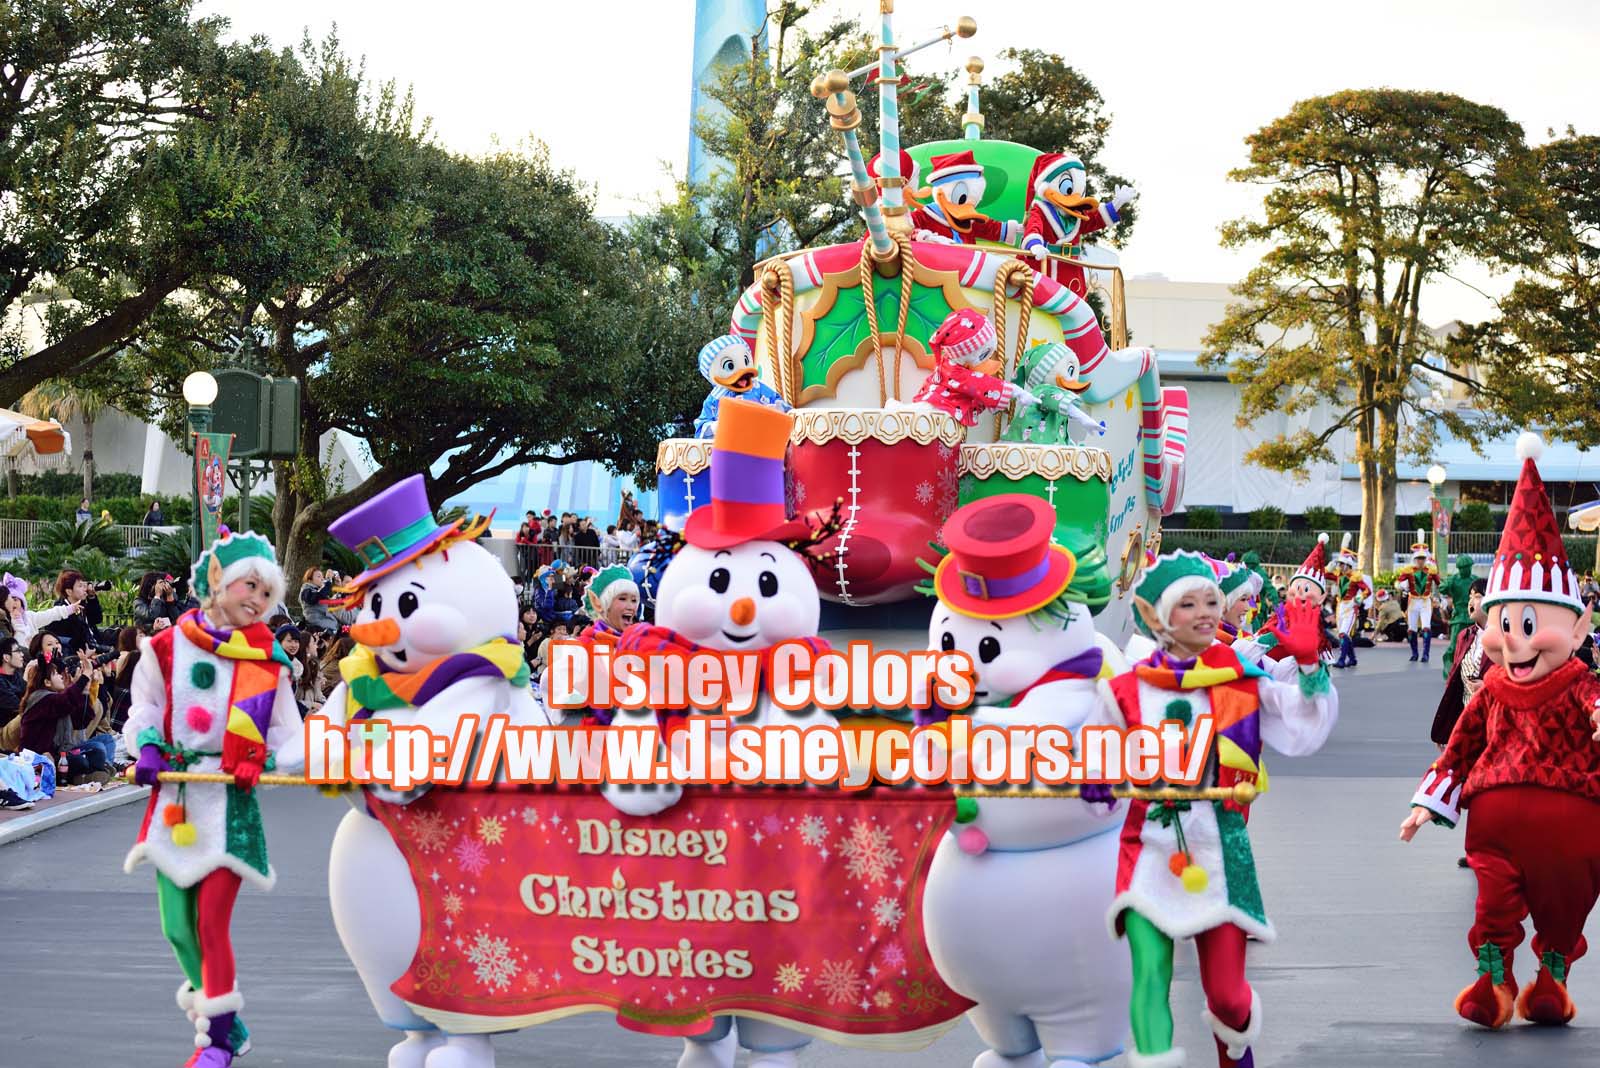 Tdl ディズニー クリスマス ストーリーズ16 フロート停止位置 鑑賞ガイド Disney Colors Event Guide